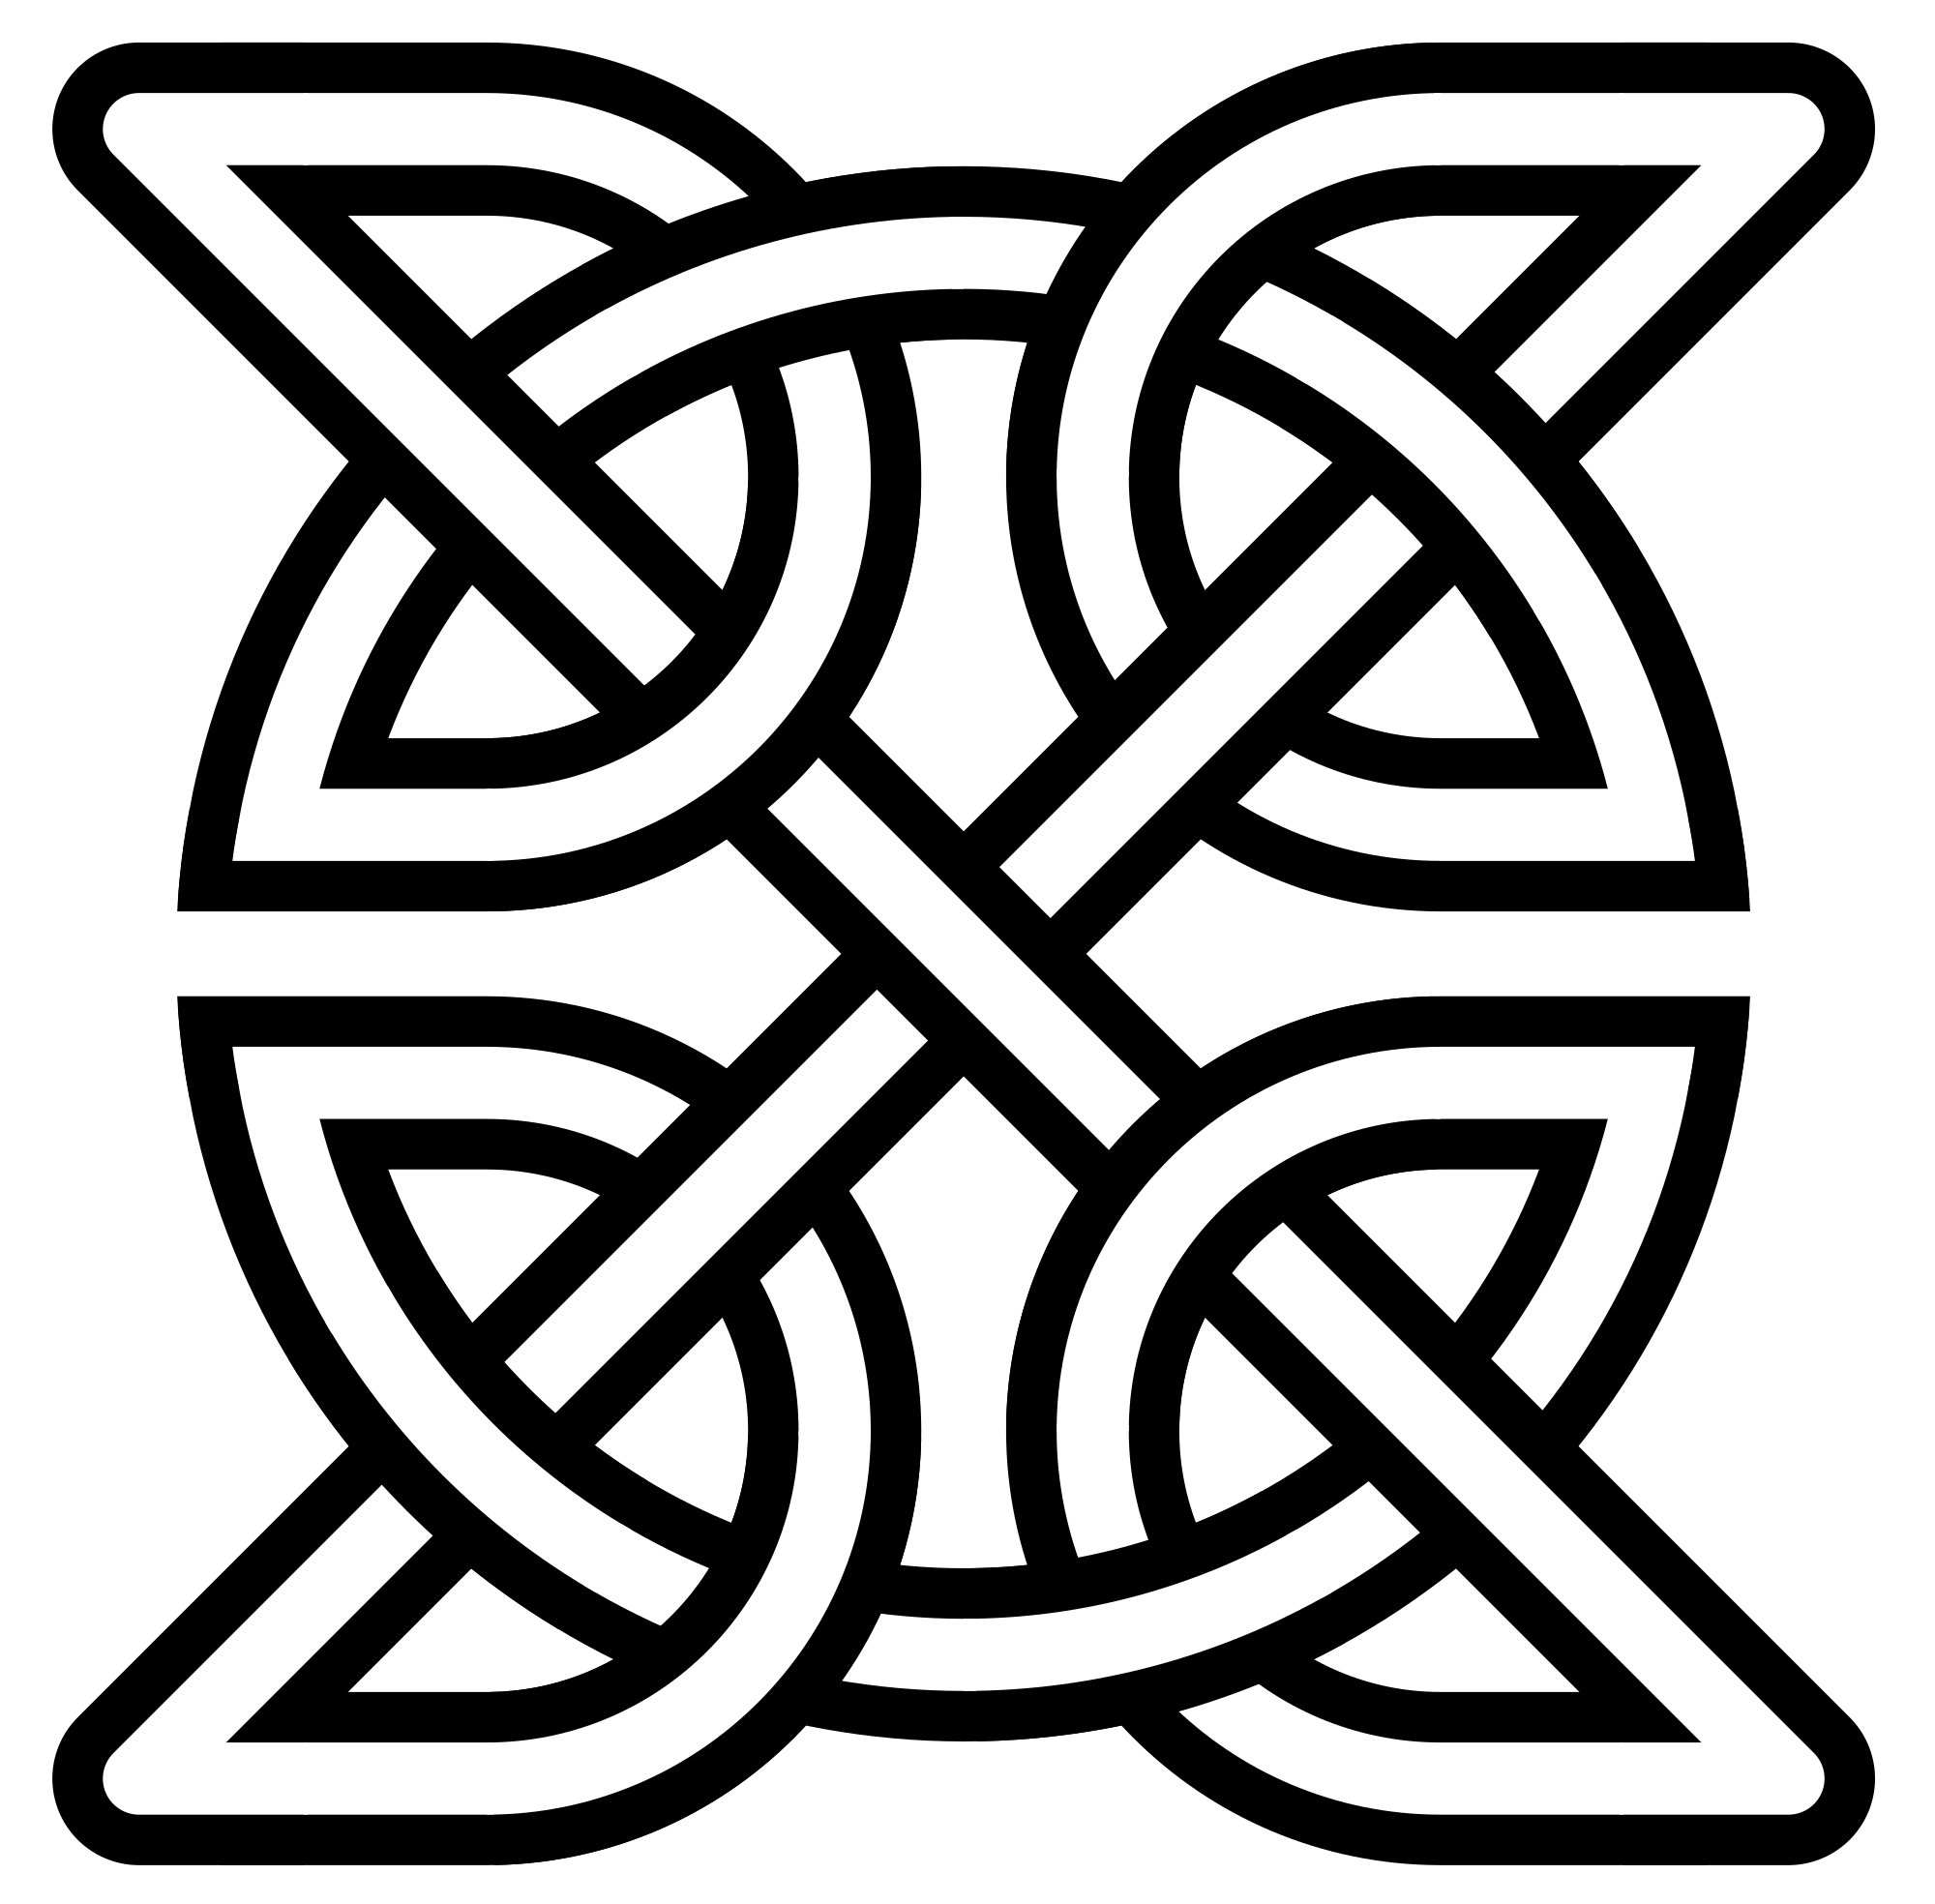 2000px-Celtic-knot-insquare.svg.png